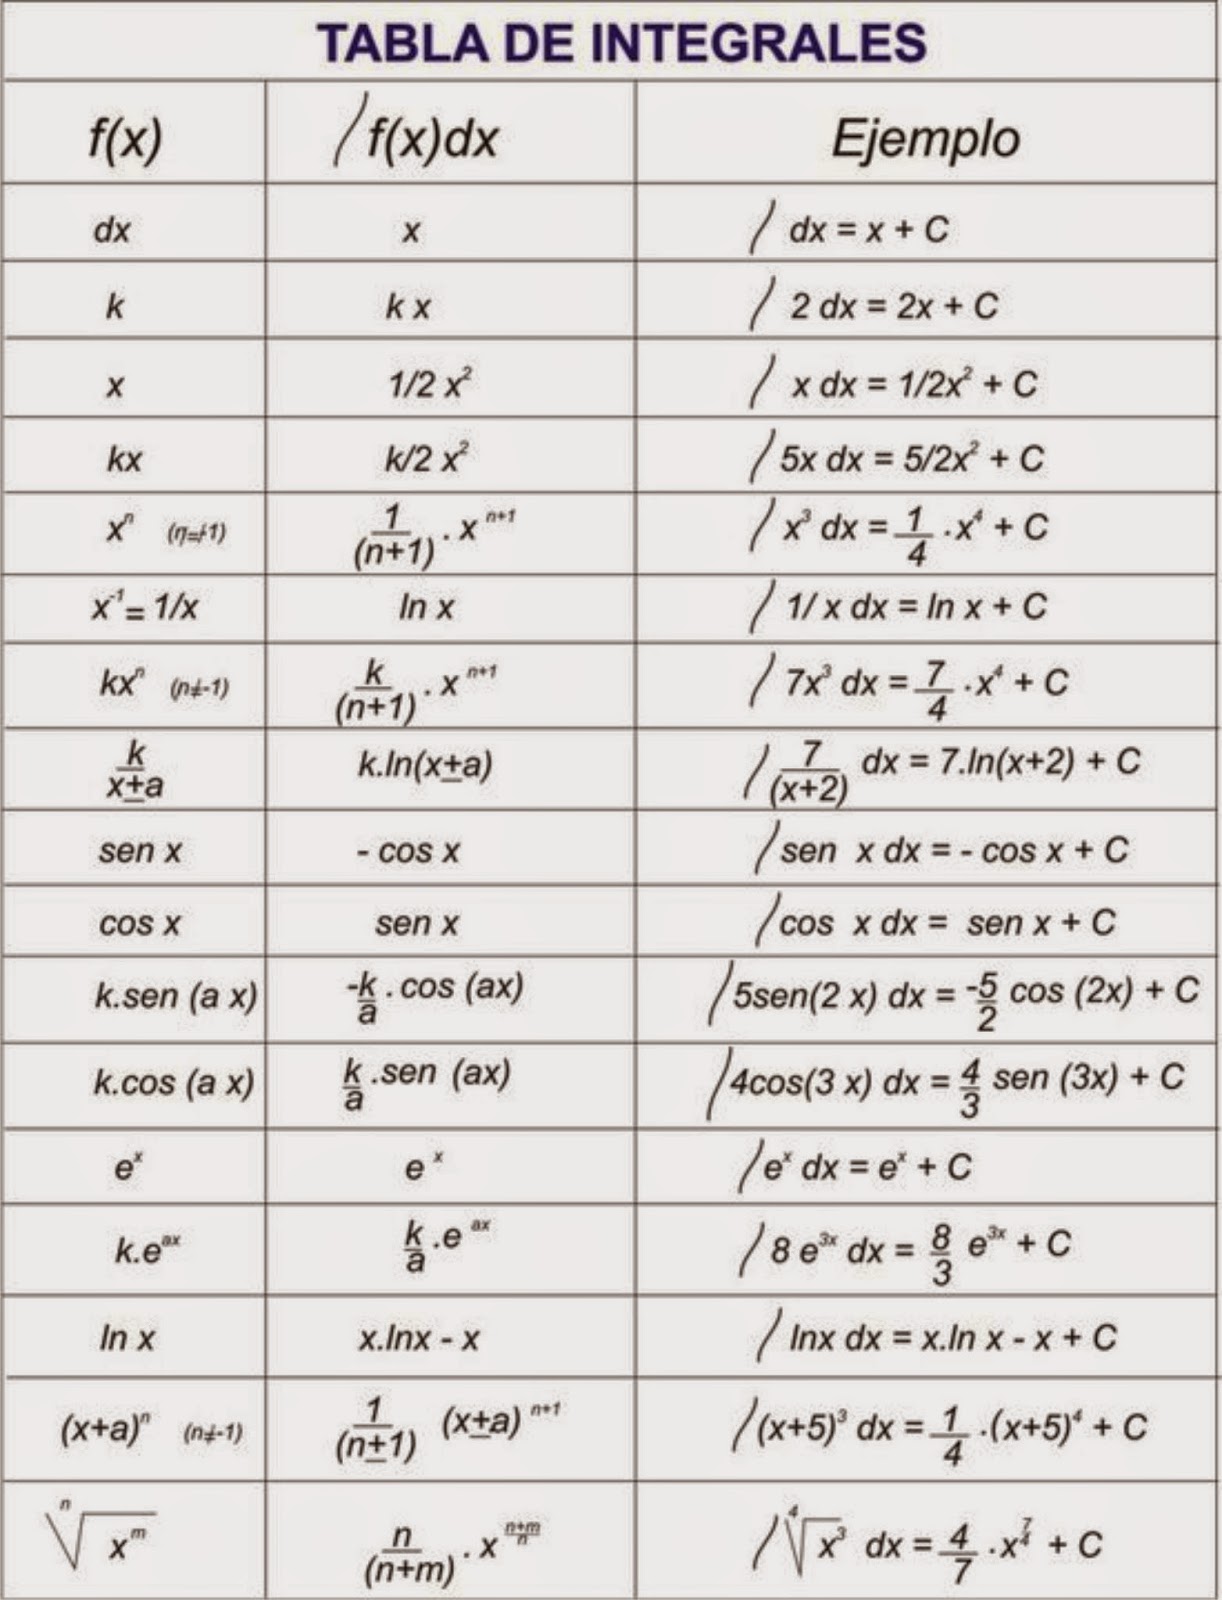 biofisica quimica matemática cbc tabla de integrales